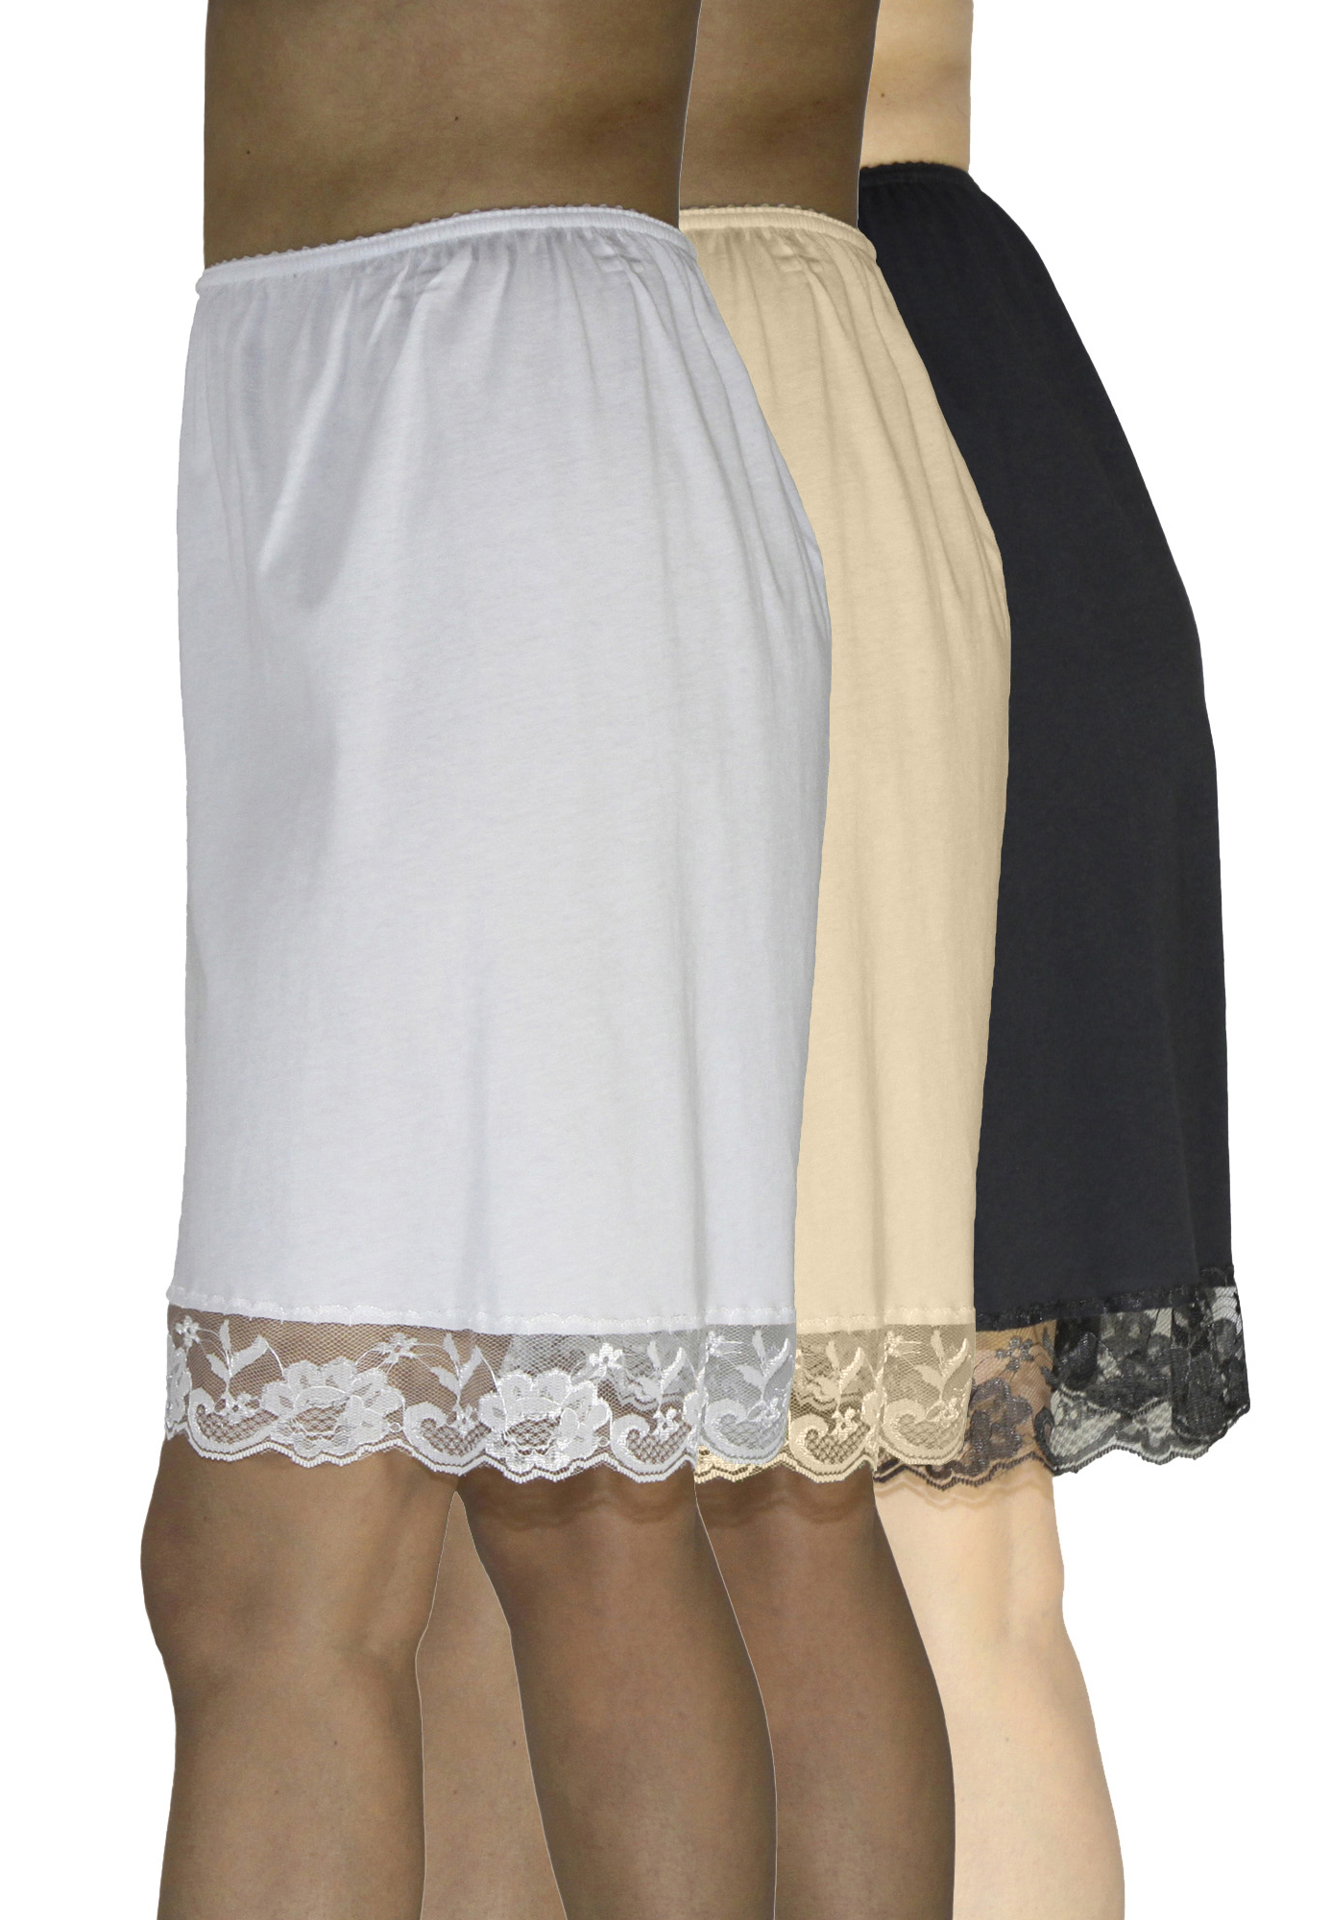 Pettipants Cotton Knit Culotte Slip Bloomers Split Skirt 9-inch